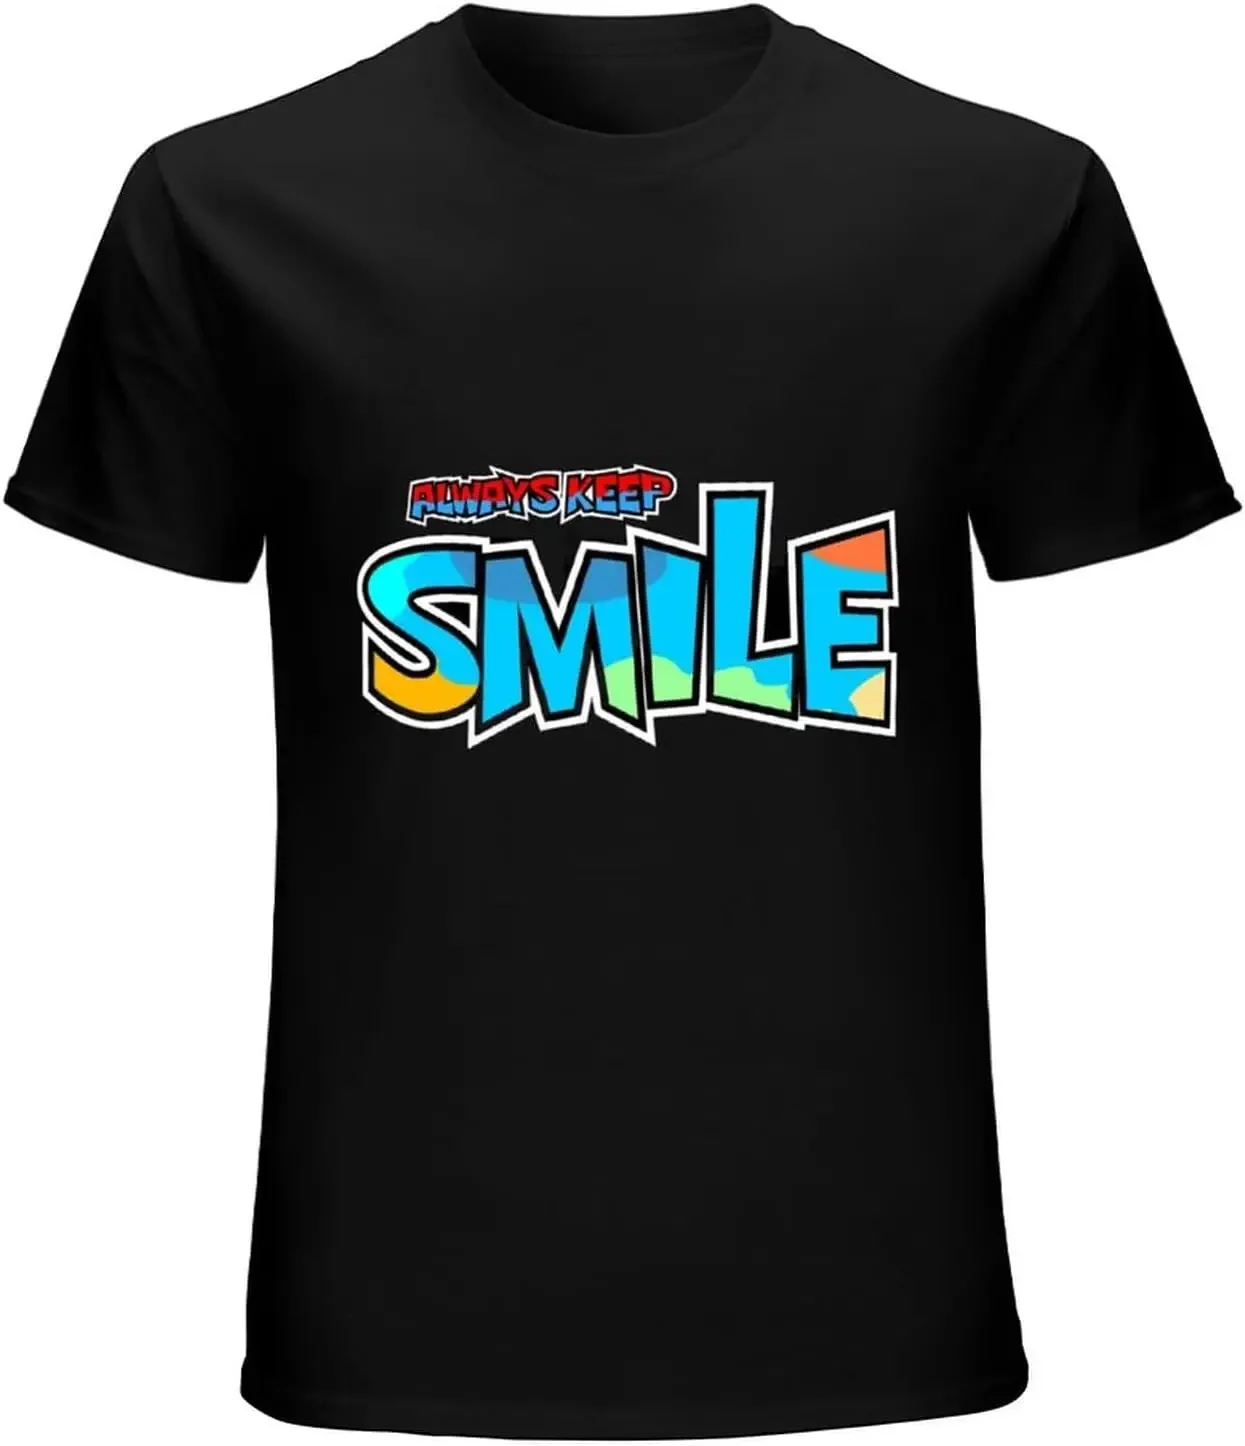 

Classic Keep Smile T-Shirt Crewneck Short Sleeve Tees